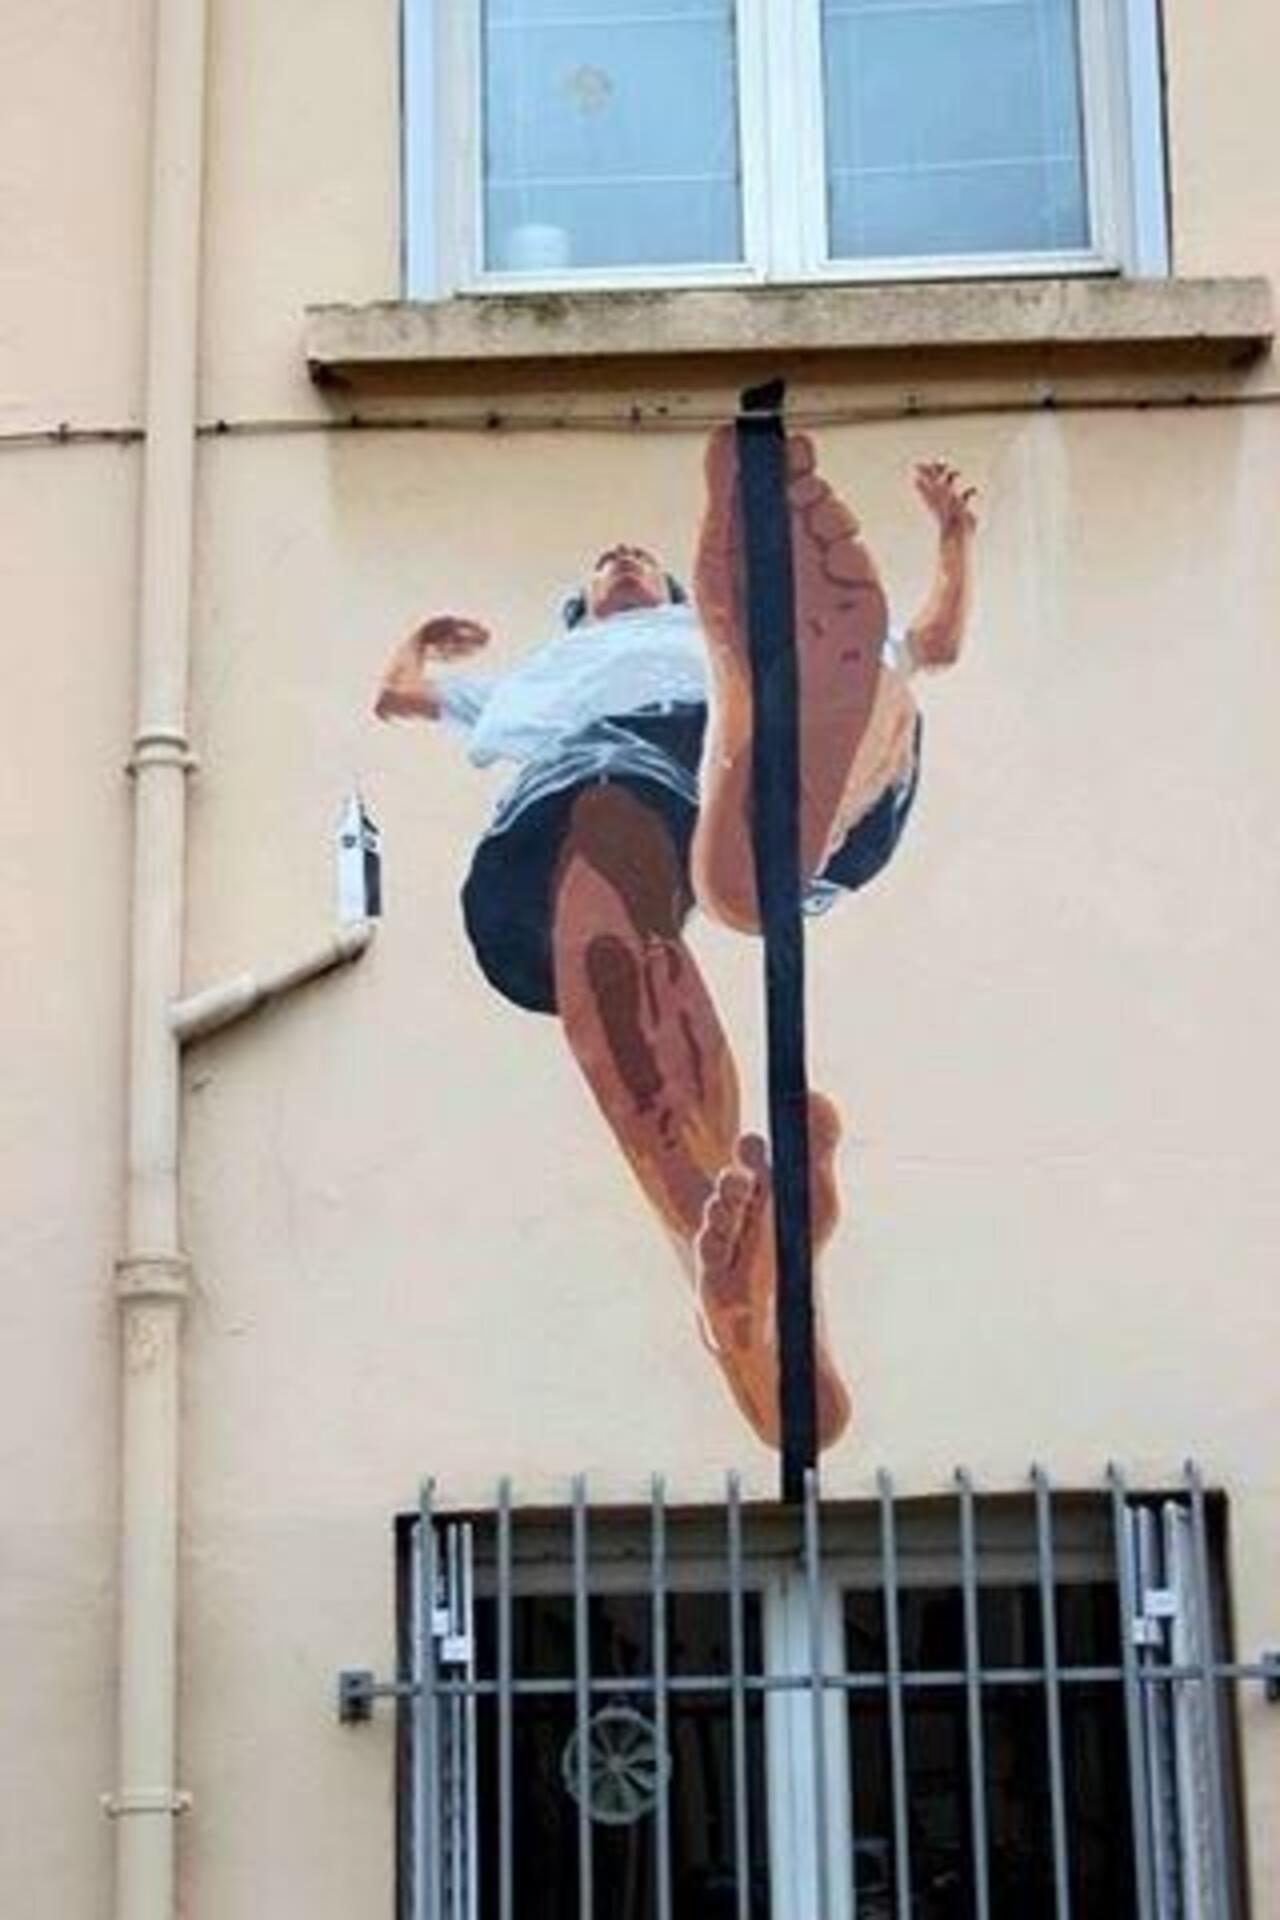 Cool Street Art of a Tightrope Walker by artist 'Big Ben' in Lyon, France #art #mural #graffiti #streetart http://t.co/wSmIDB59qP